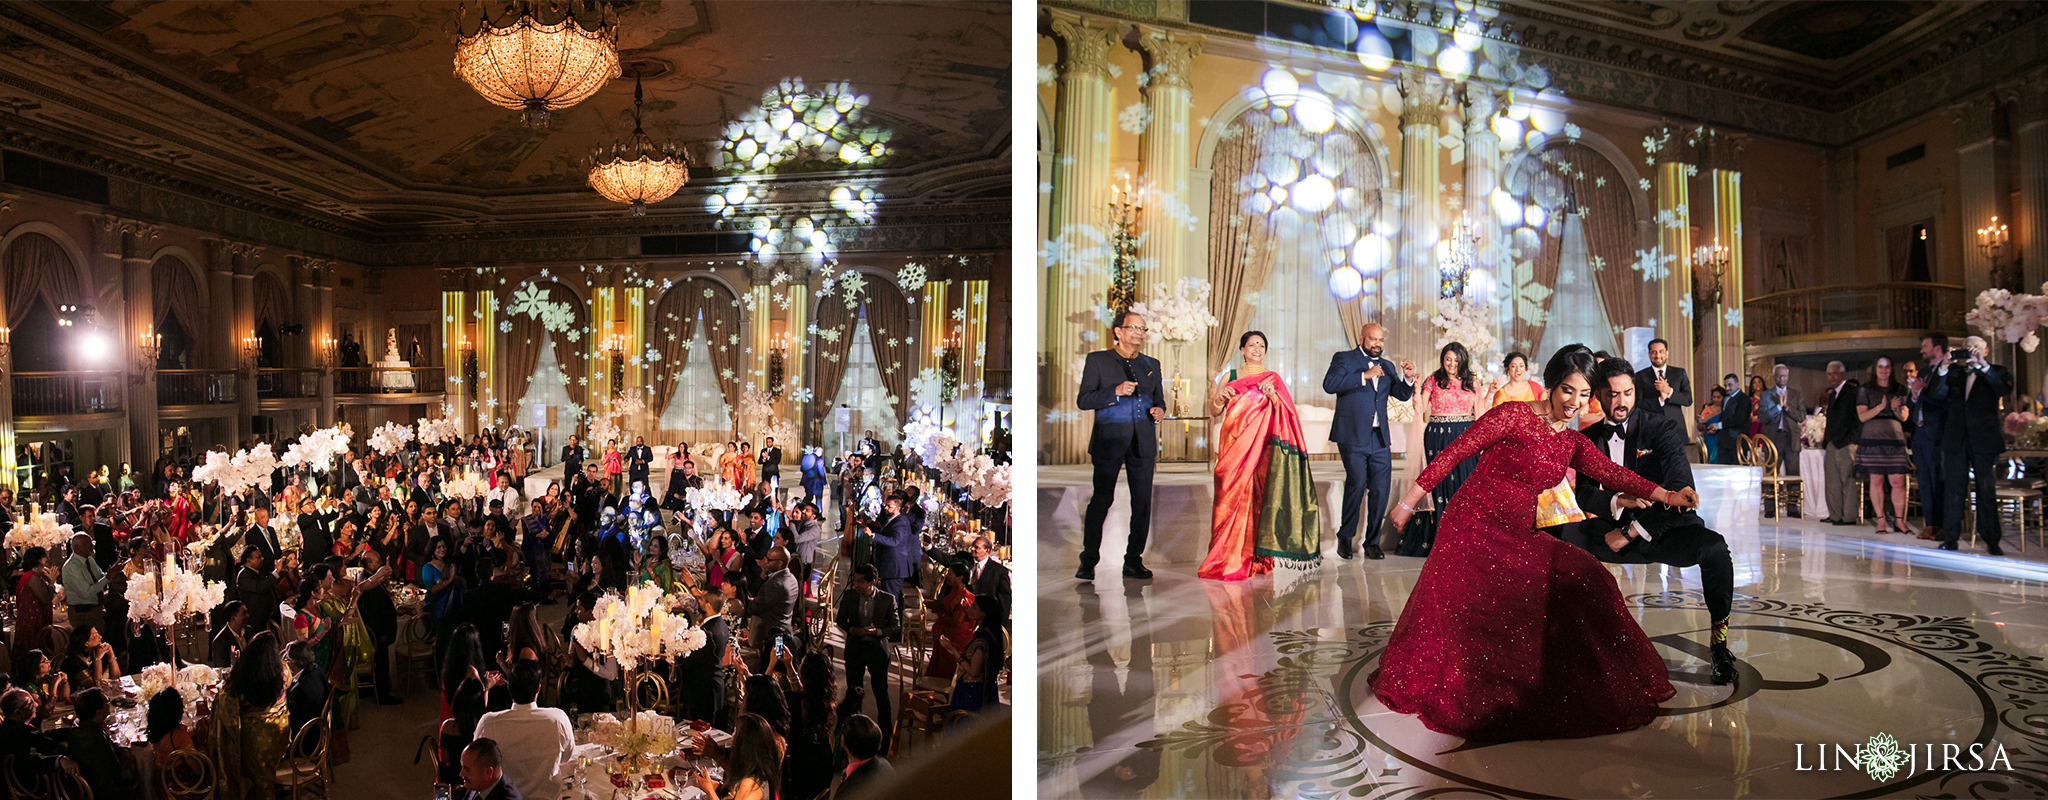 52 Millennium Biltmore Hotel Los Angeles Indian Wedding Reception Photography